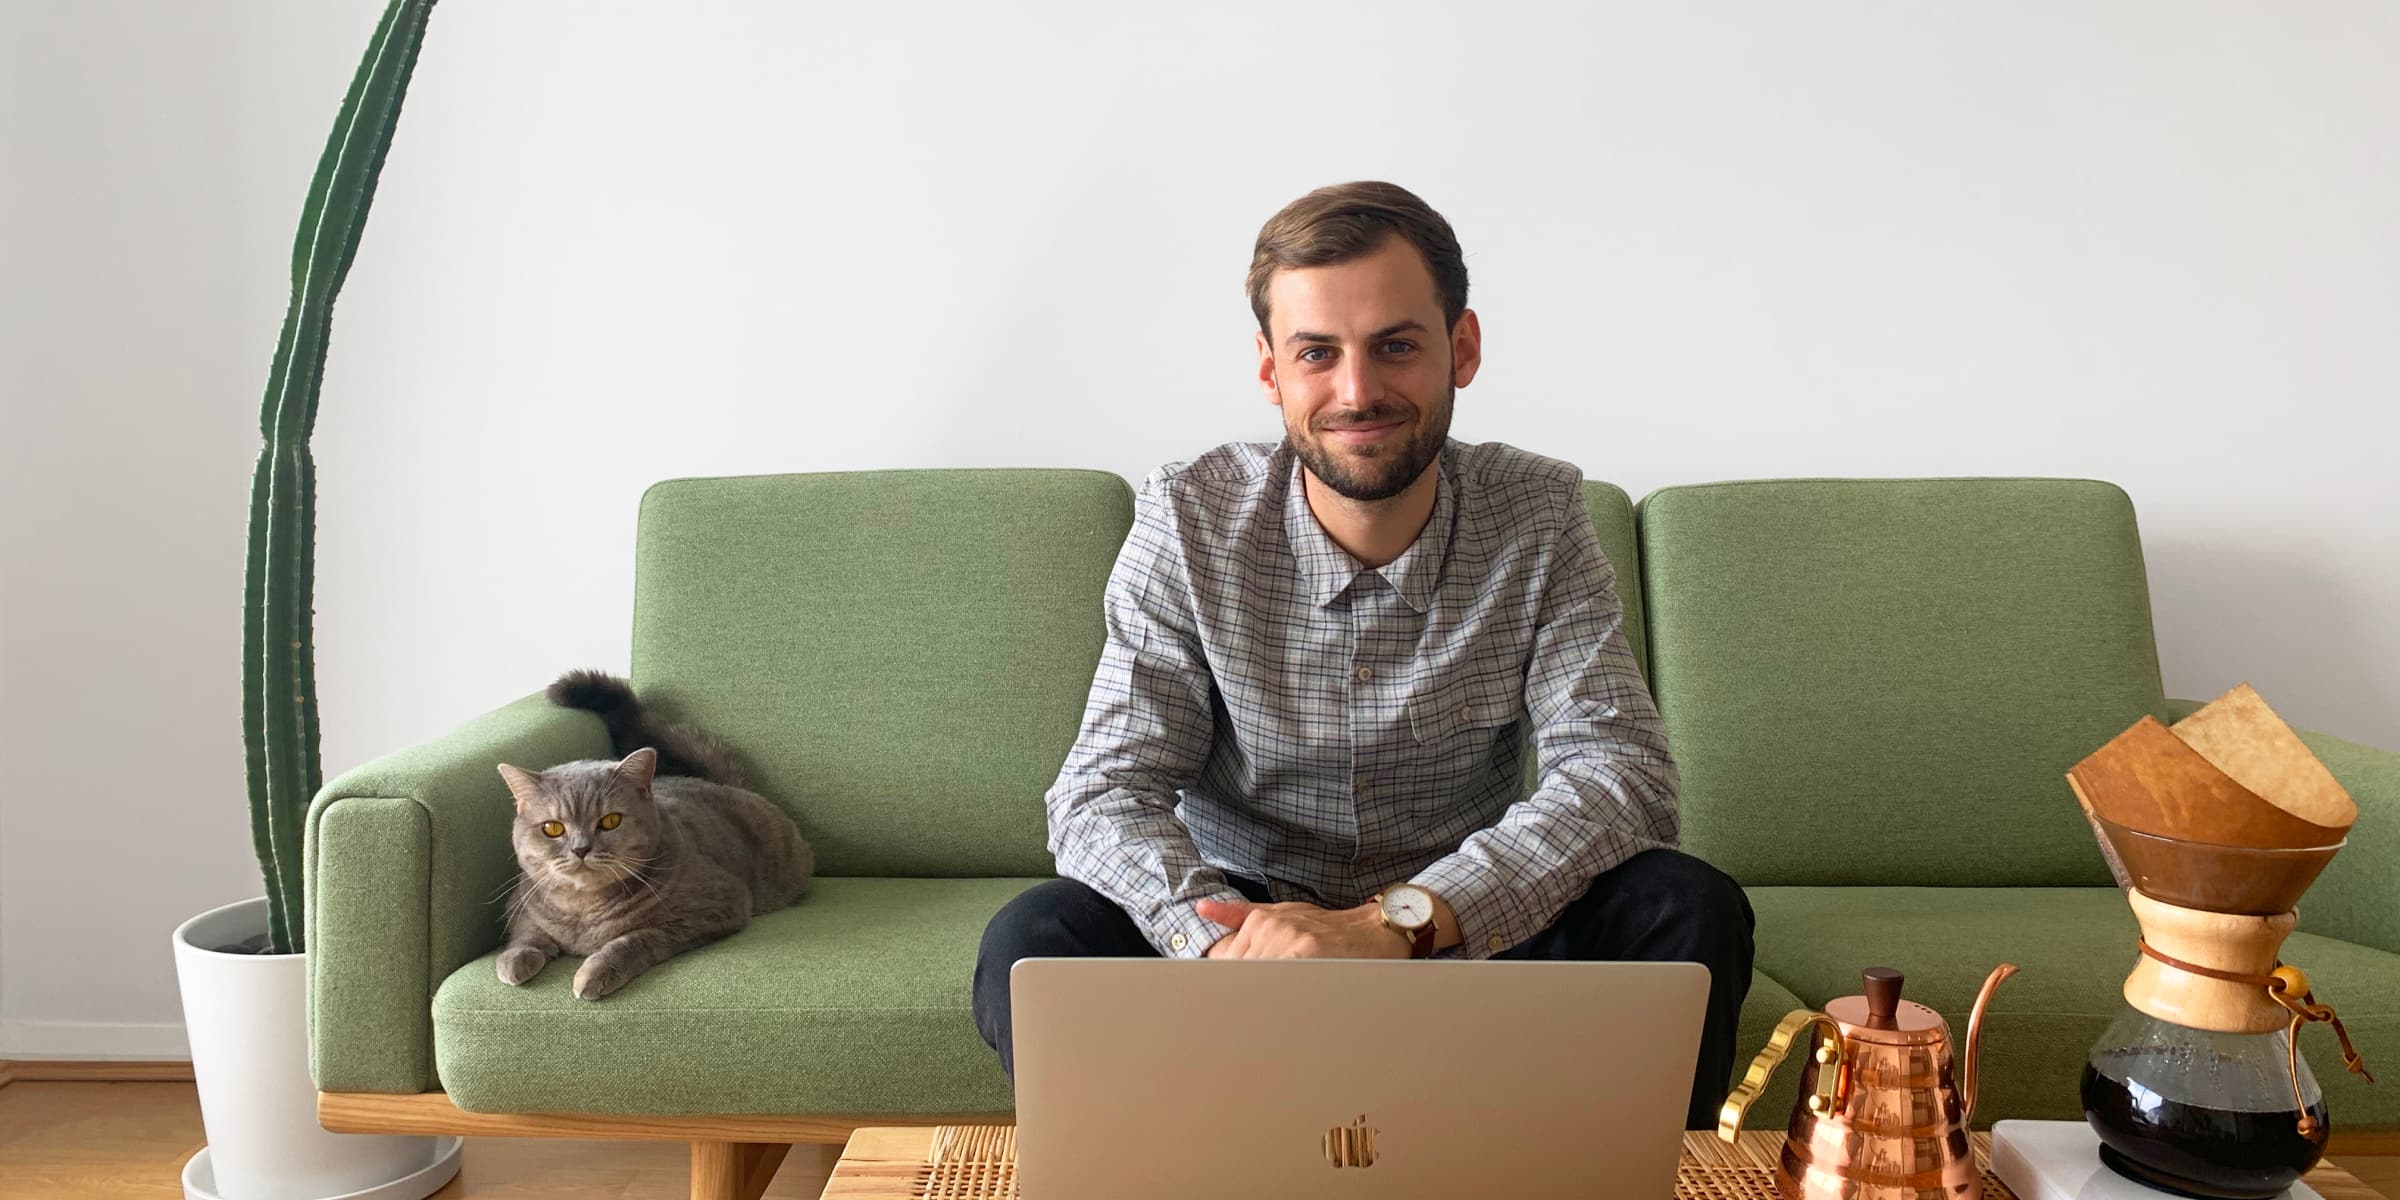 Product UX/UI Designer, Jordan Hughes, sitting on couch